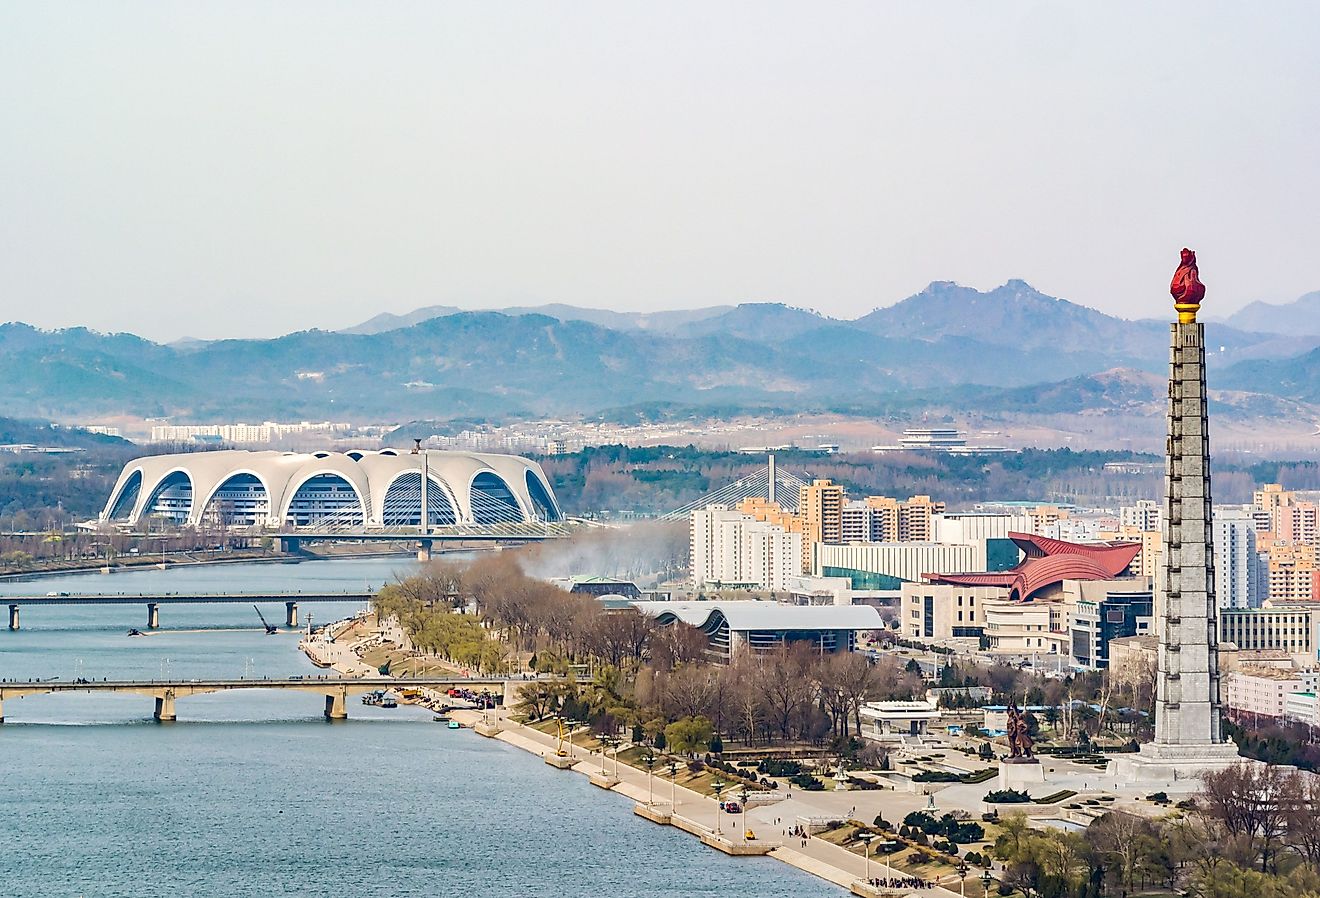 Pyongyang, North Korean capital skyline with Rungrado 1st of May Stadium. Image credit Herr Loeffler via Shutterstock